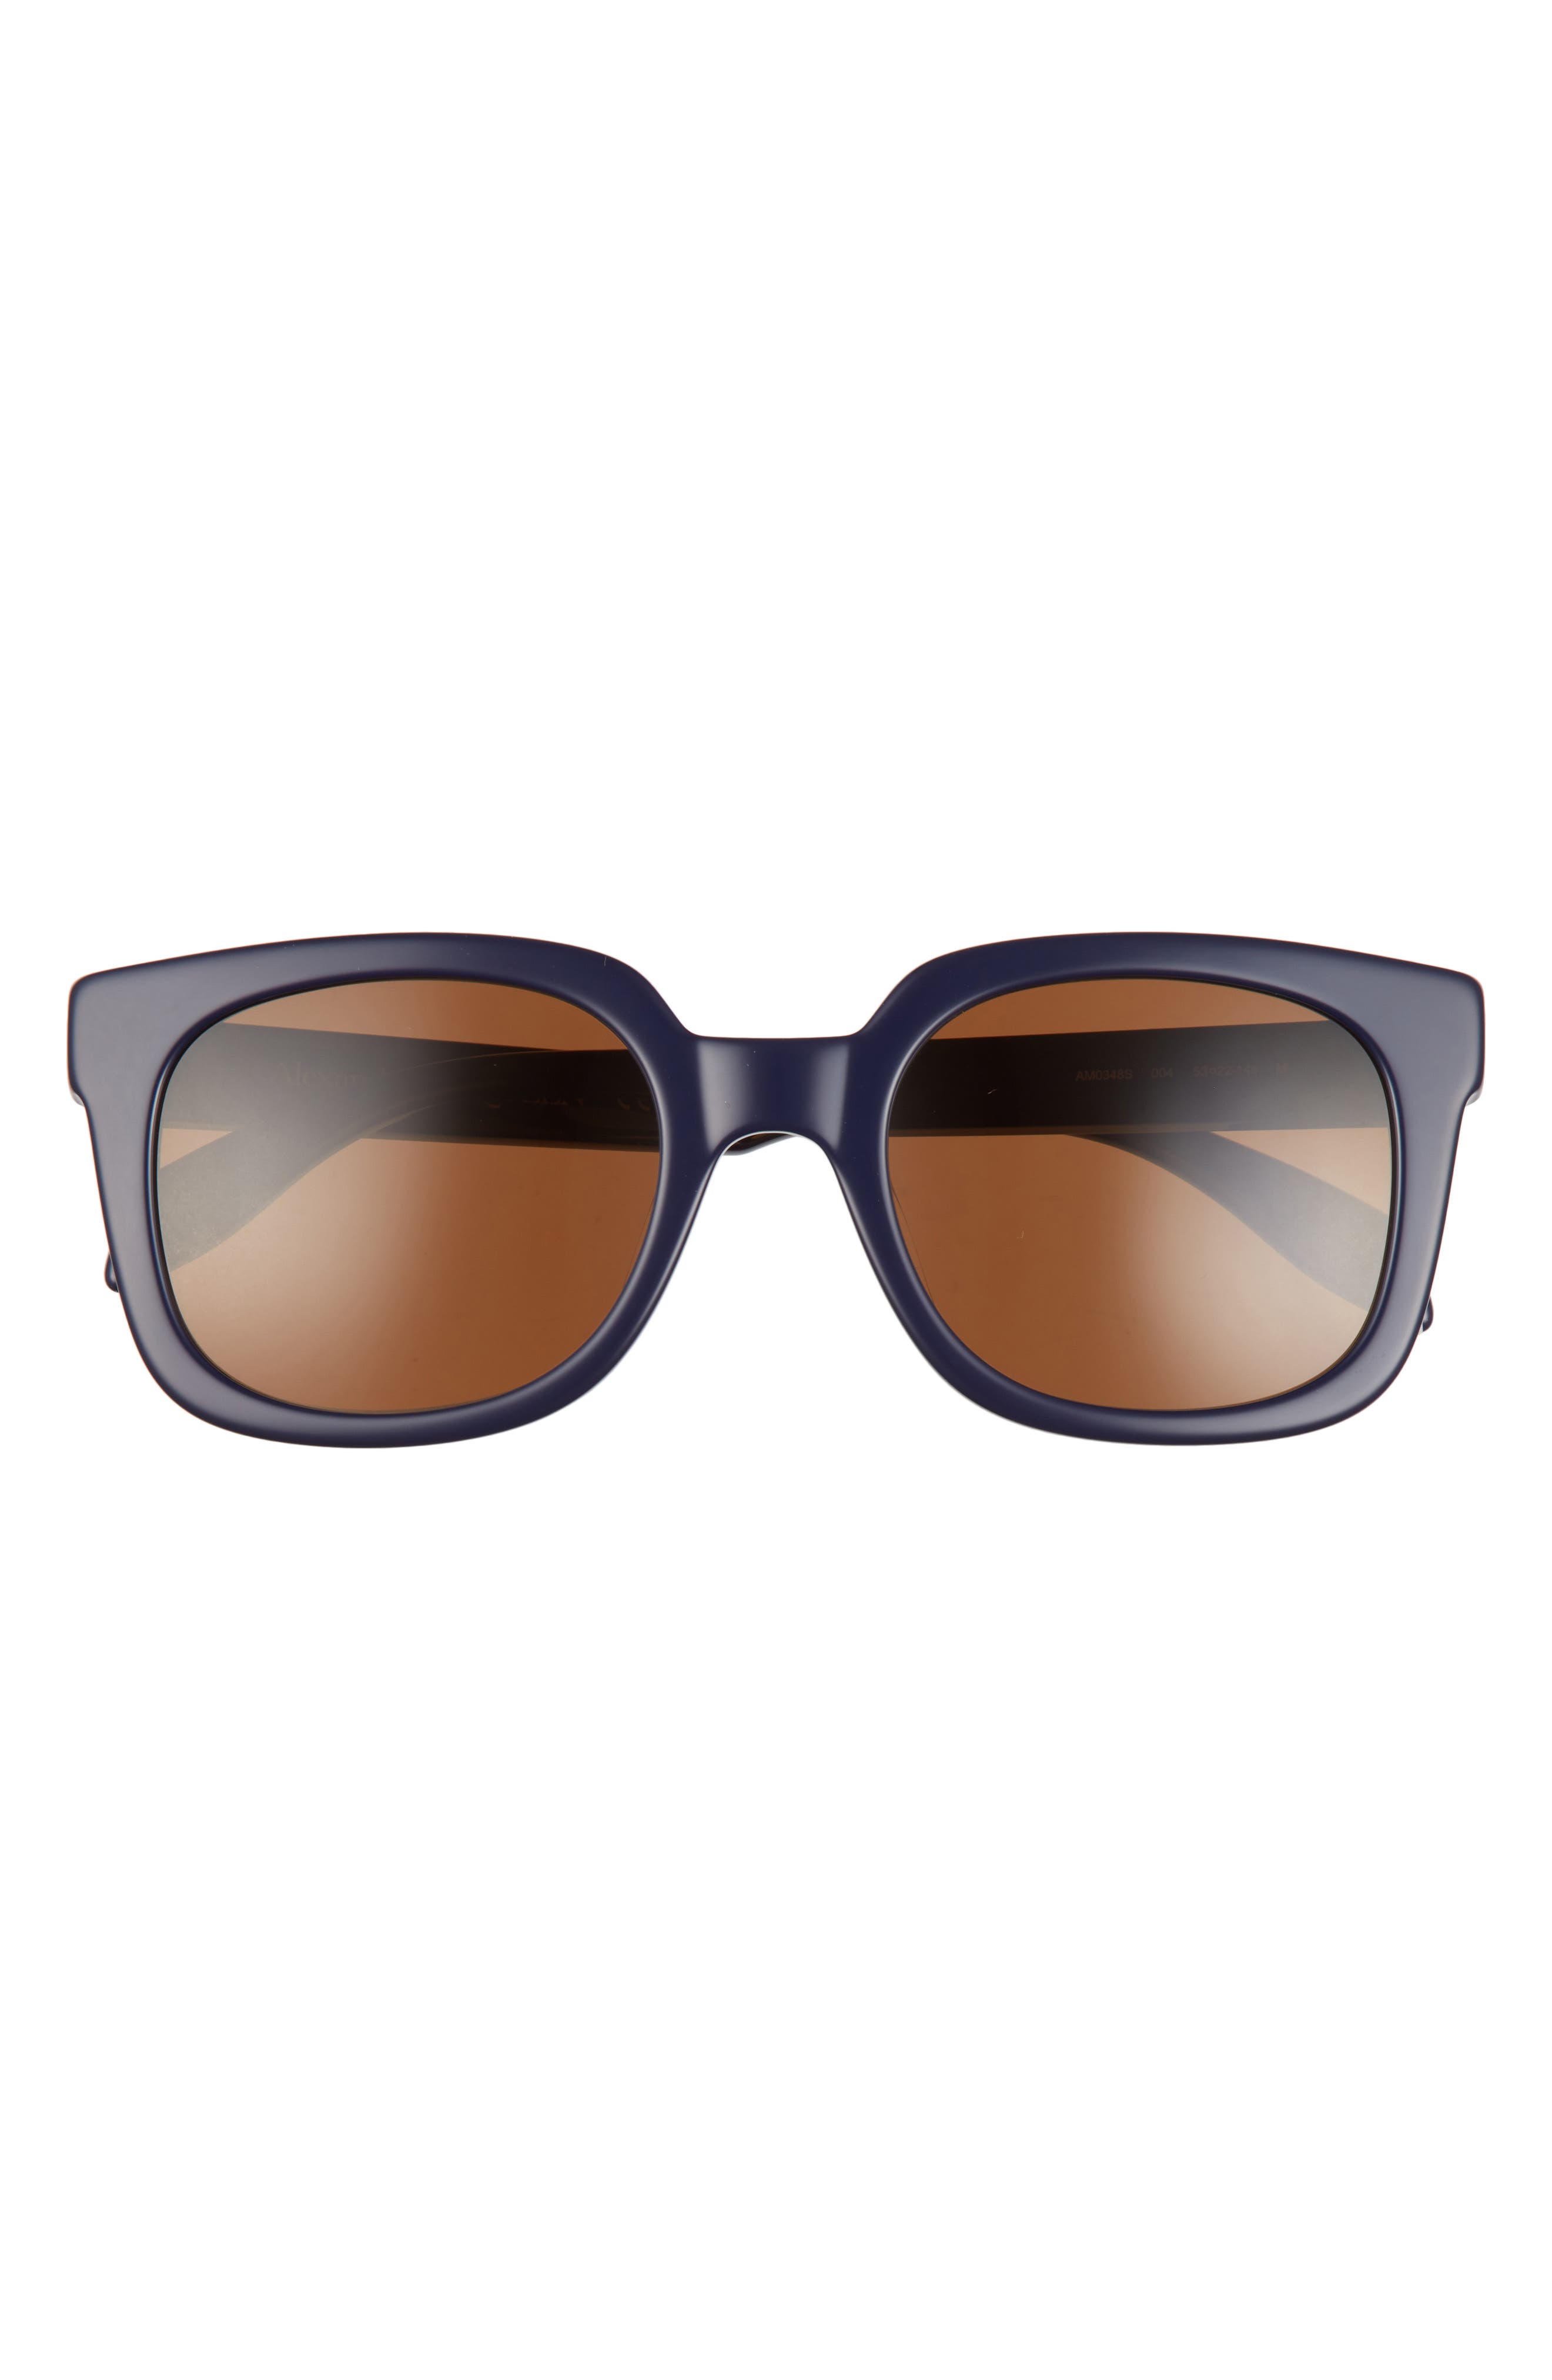 Alexander McQueen 53mm Rectangular Sunglasses in Blue at Nordstrom